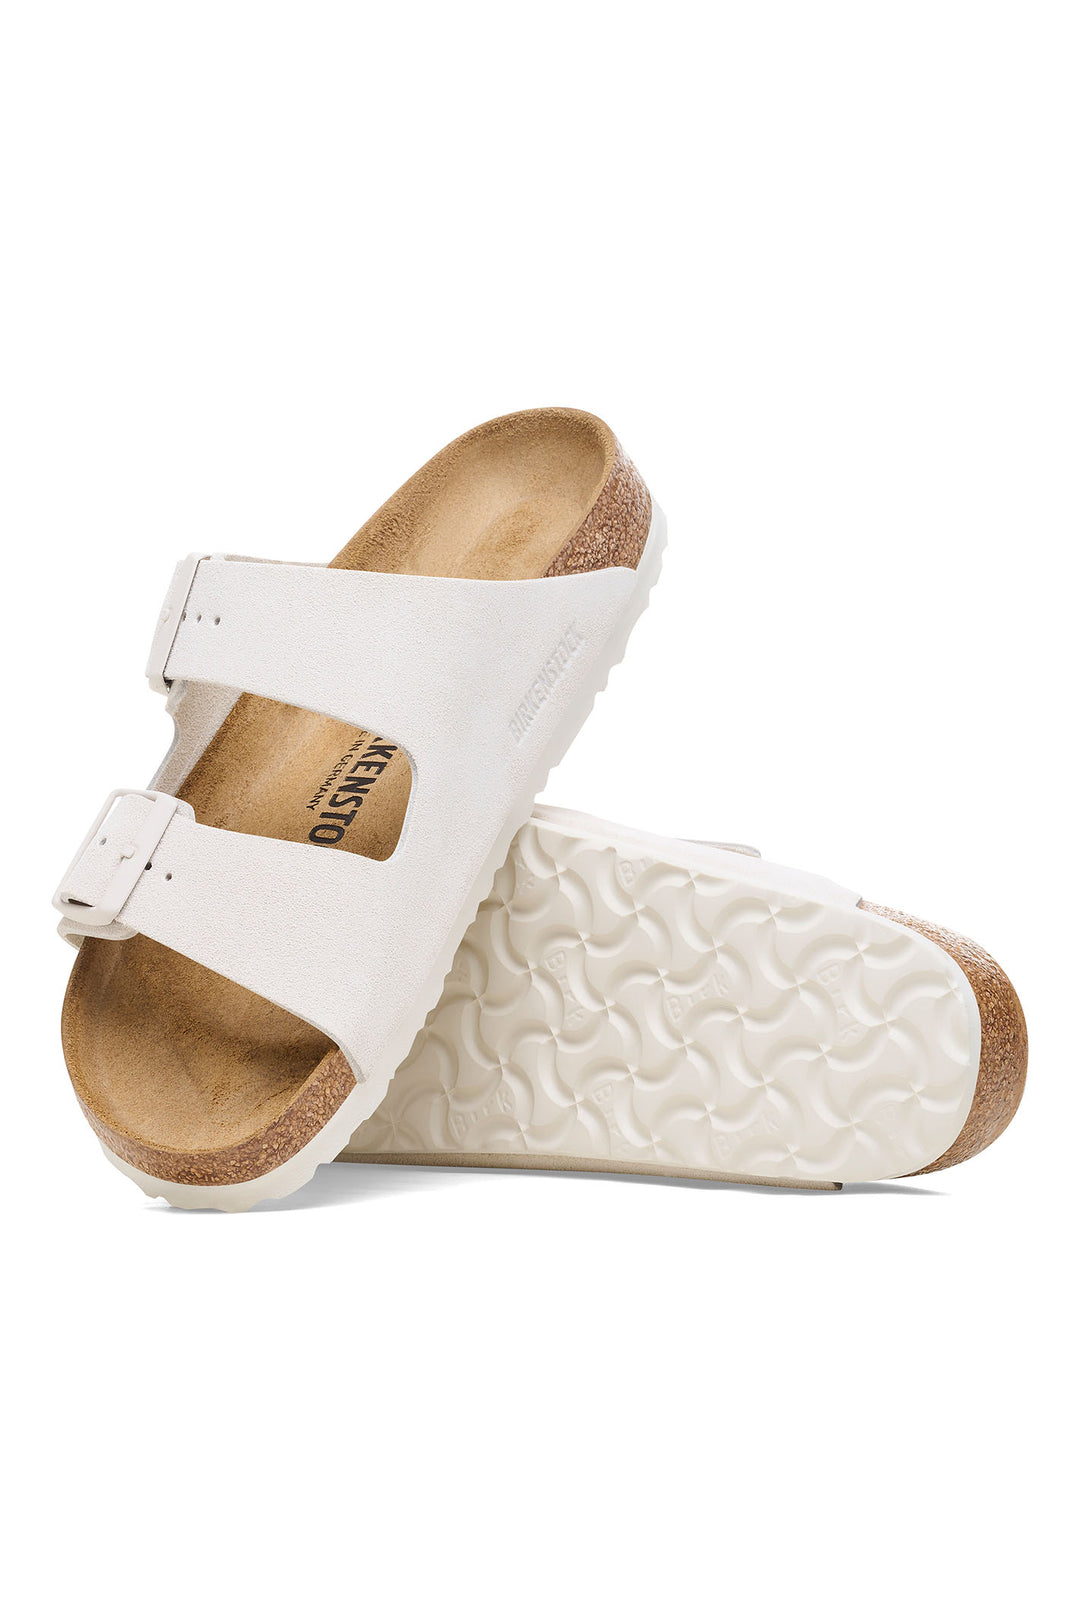 Birkenstock Arizona 1026842 Antique White Suede Narrow Fit Sandal - Shirley Allum Boutique